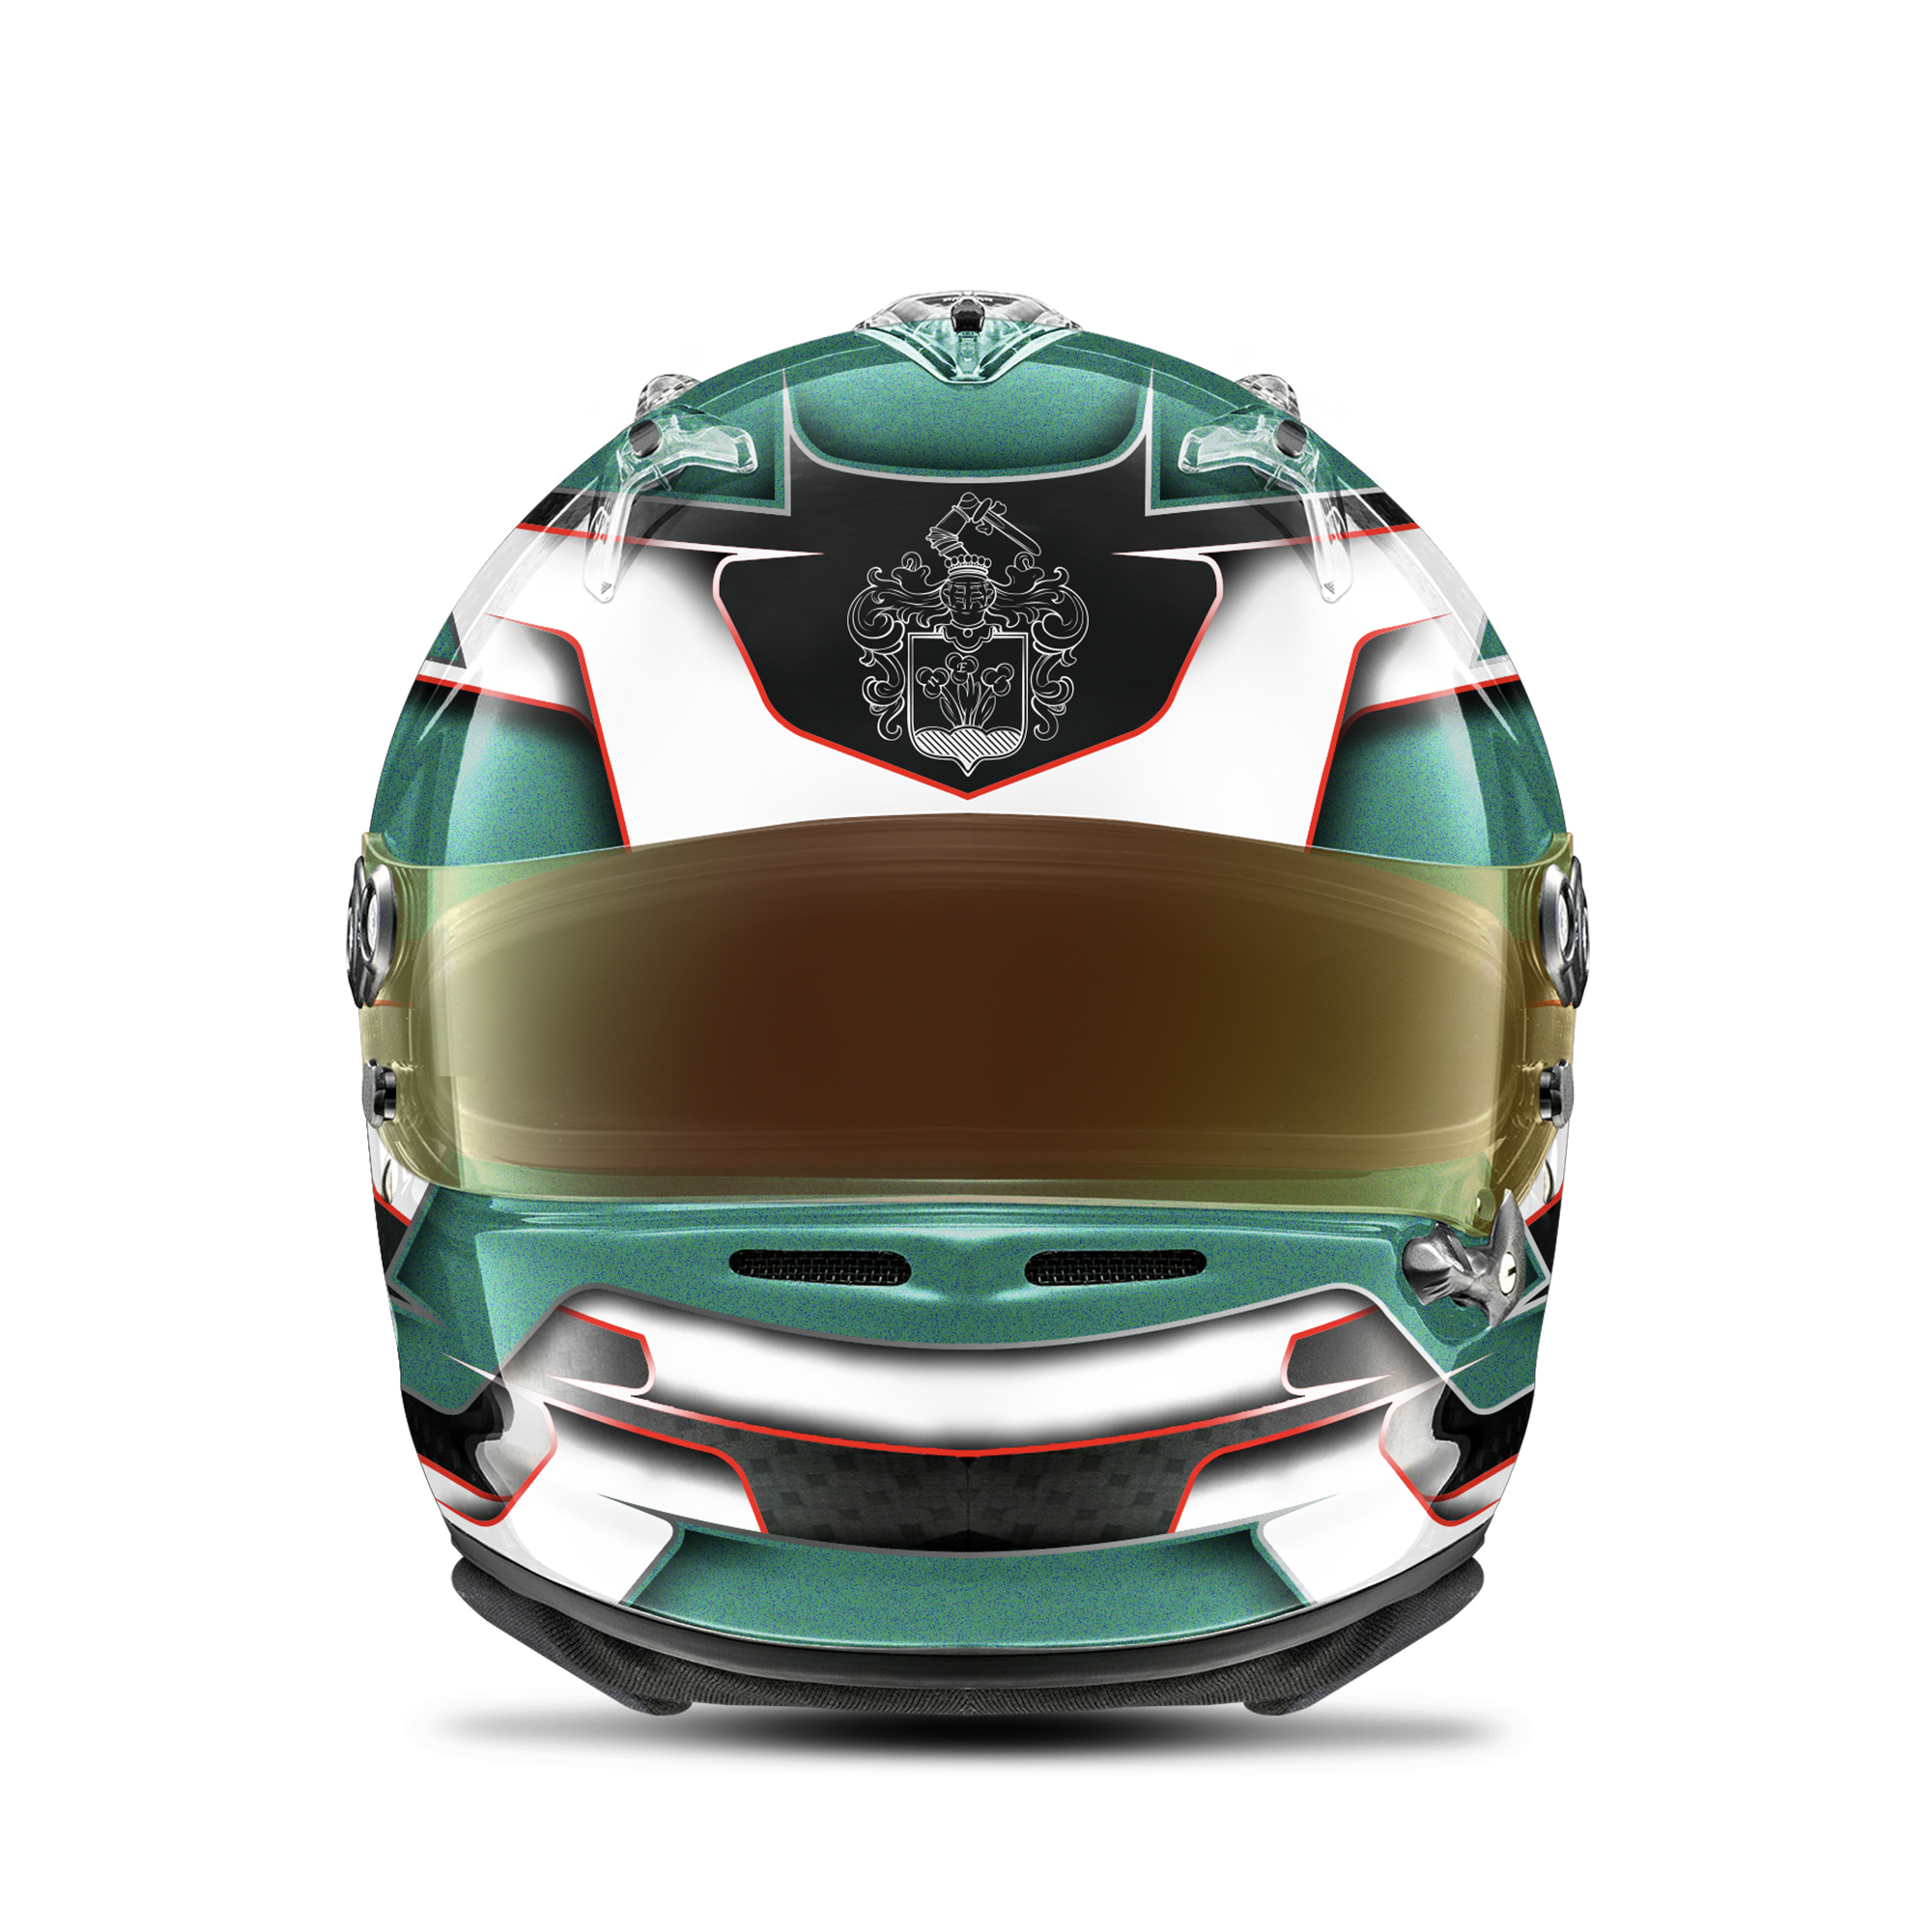 Arai GP7-SCR helmet design